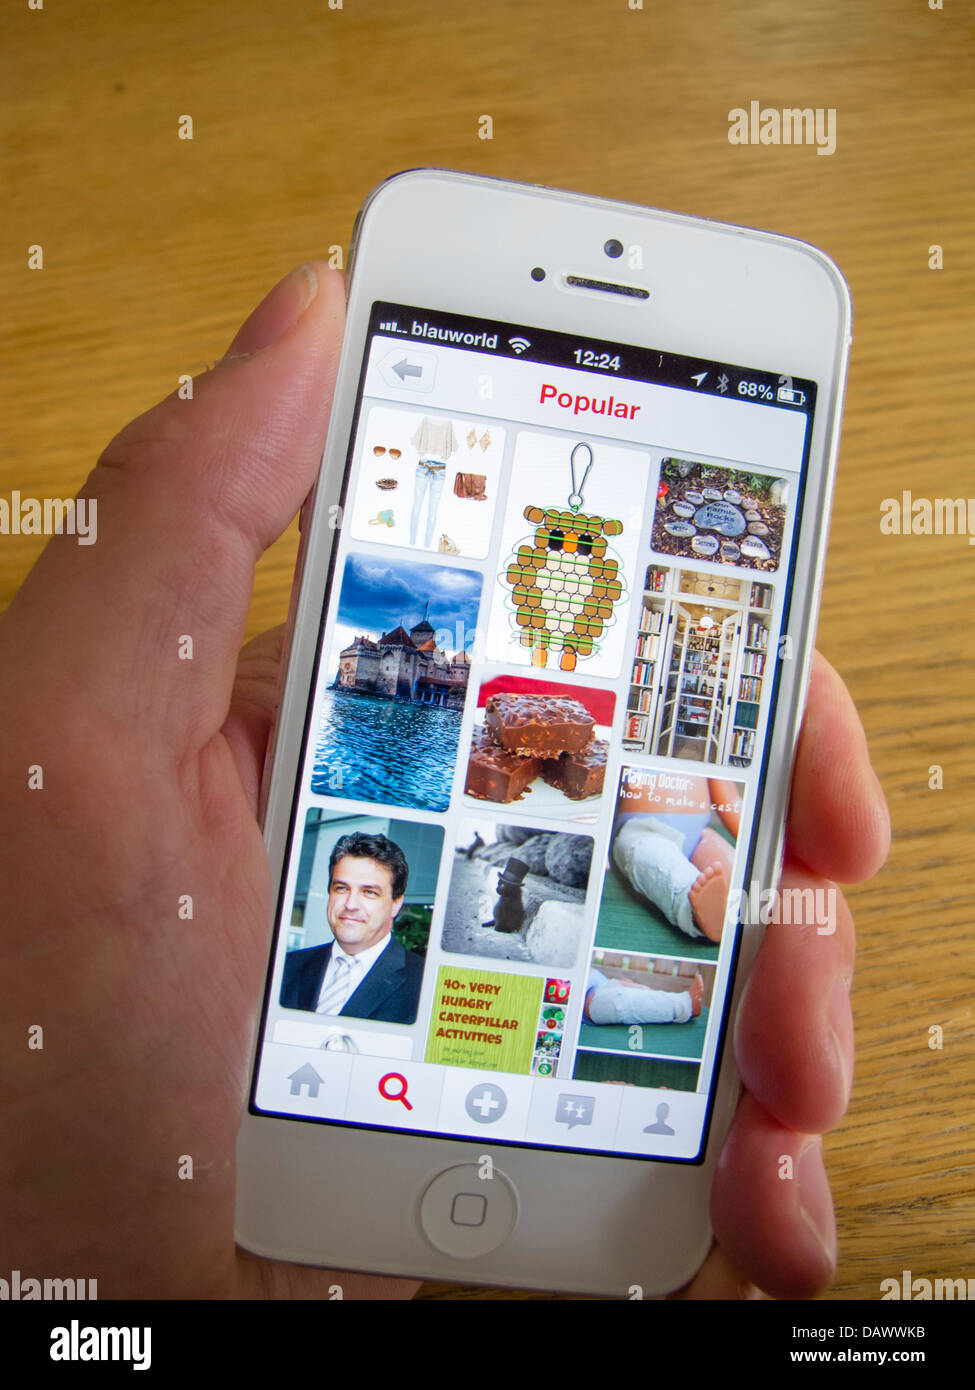 Pinterest homepage on white iPhone 5 smartphone Stock Photo